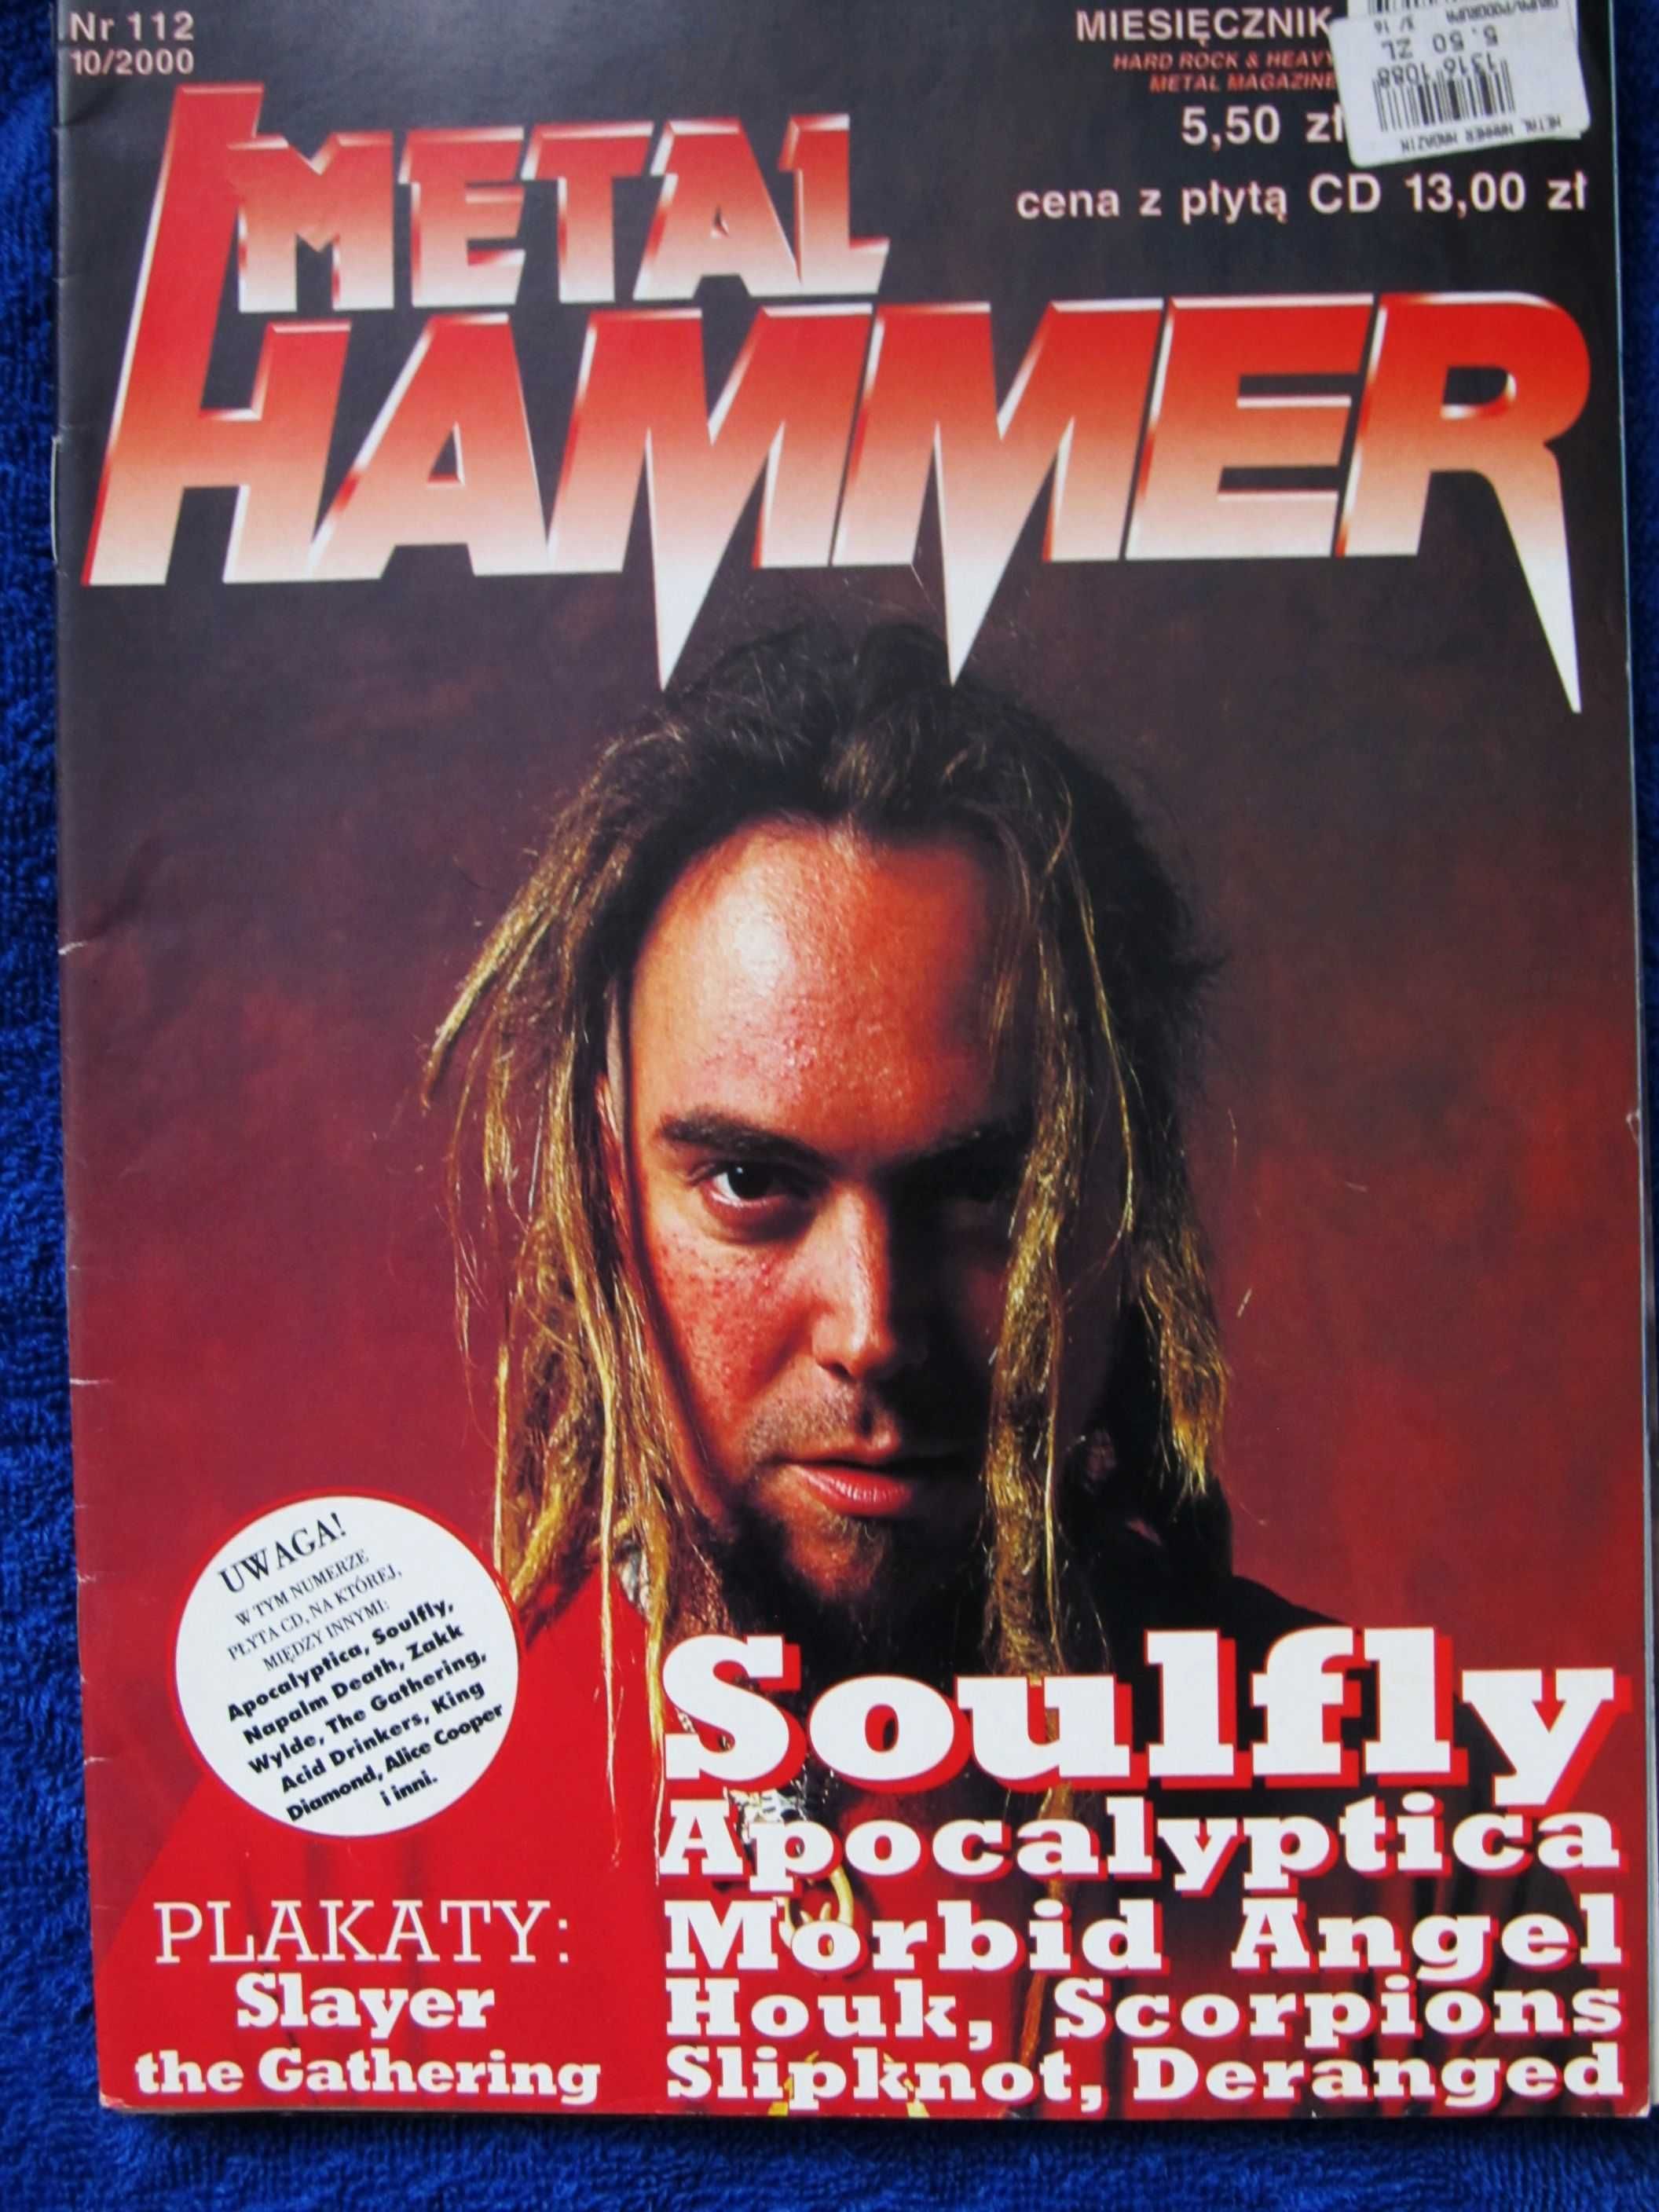 Metal Hammer 10/2000 Soufly,Apocalyptica,Morbid Angel,Houk